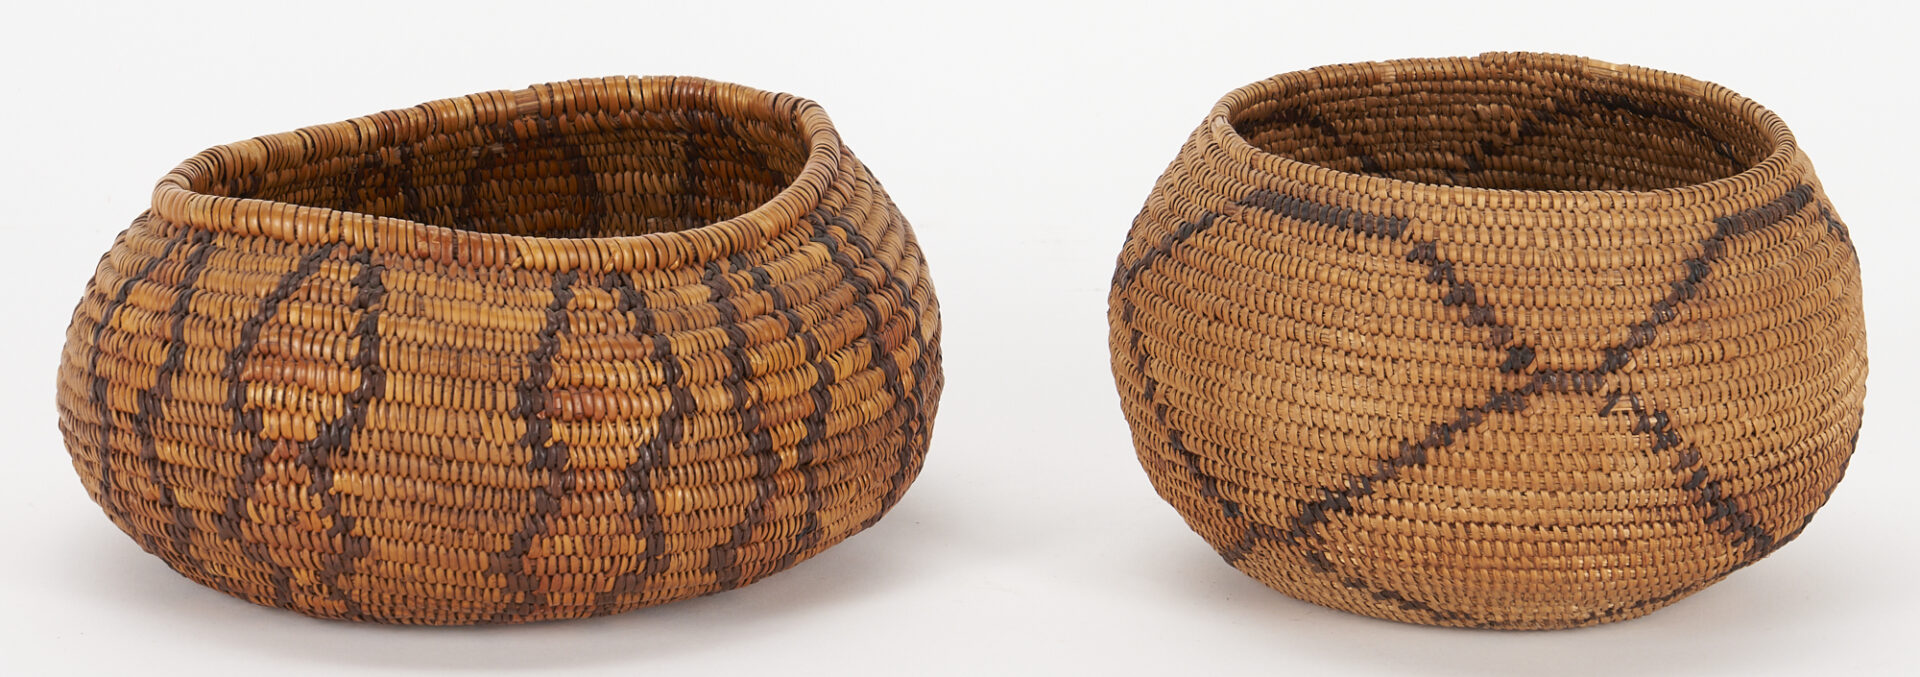 Lot 548: 5 Native American Baskets